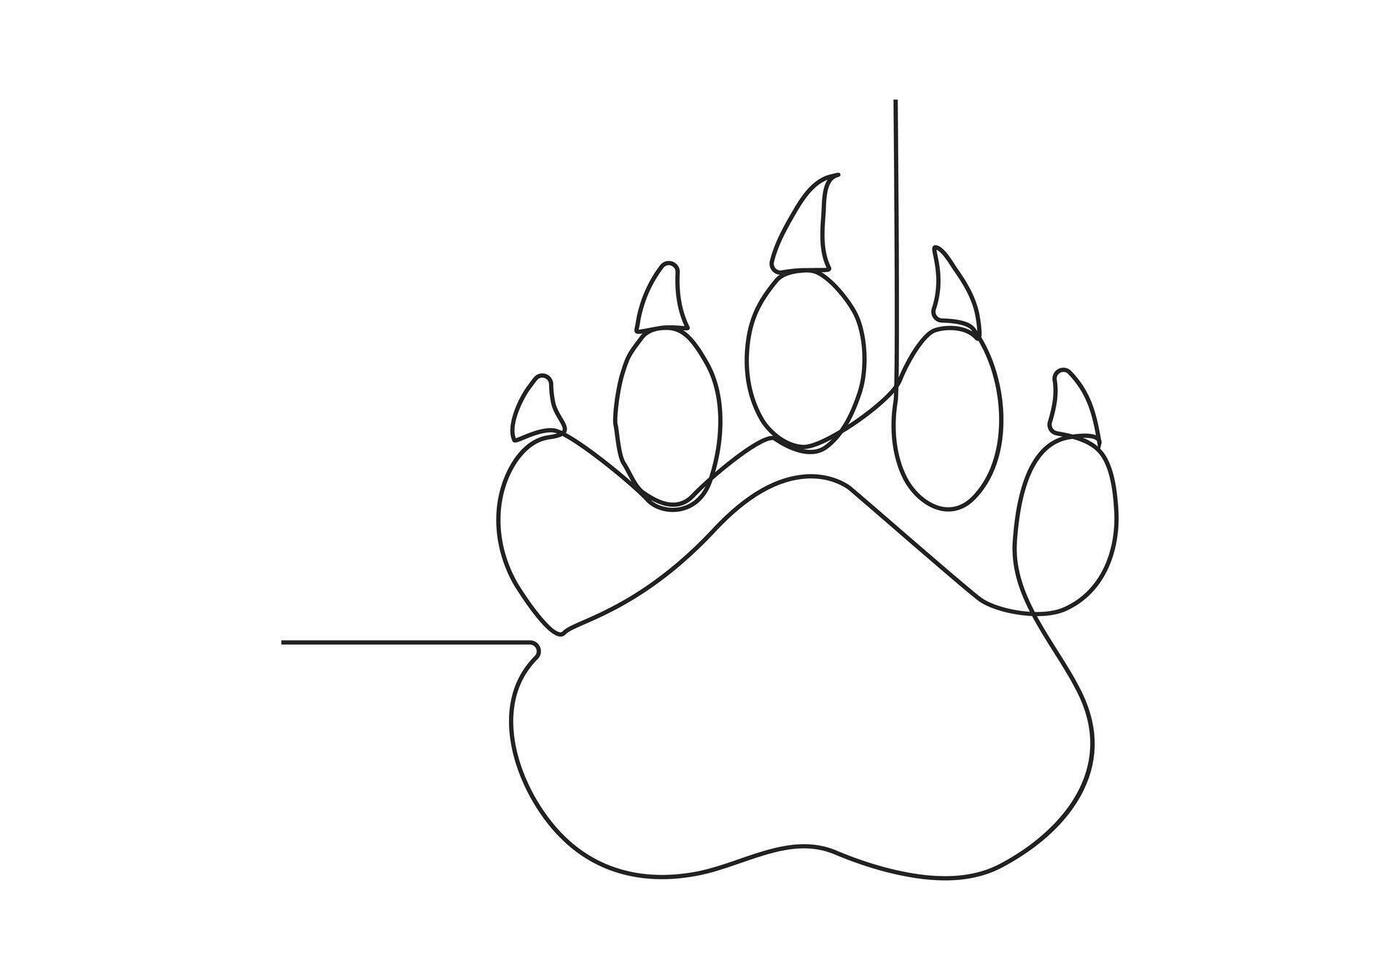 djur- Tass i kontinuerlig linje teckning. ett kontinuerlig linje teckning av djur- fotavtryck ikon. vektor illustration. linje konst av djur- fotavtryck